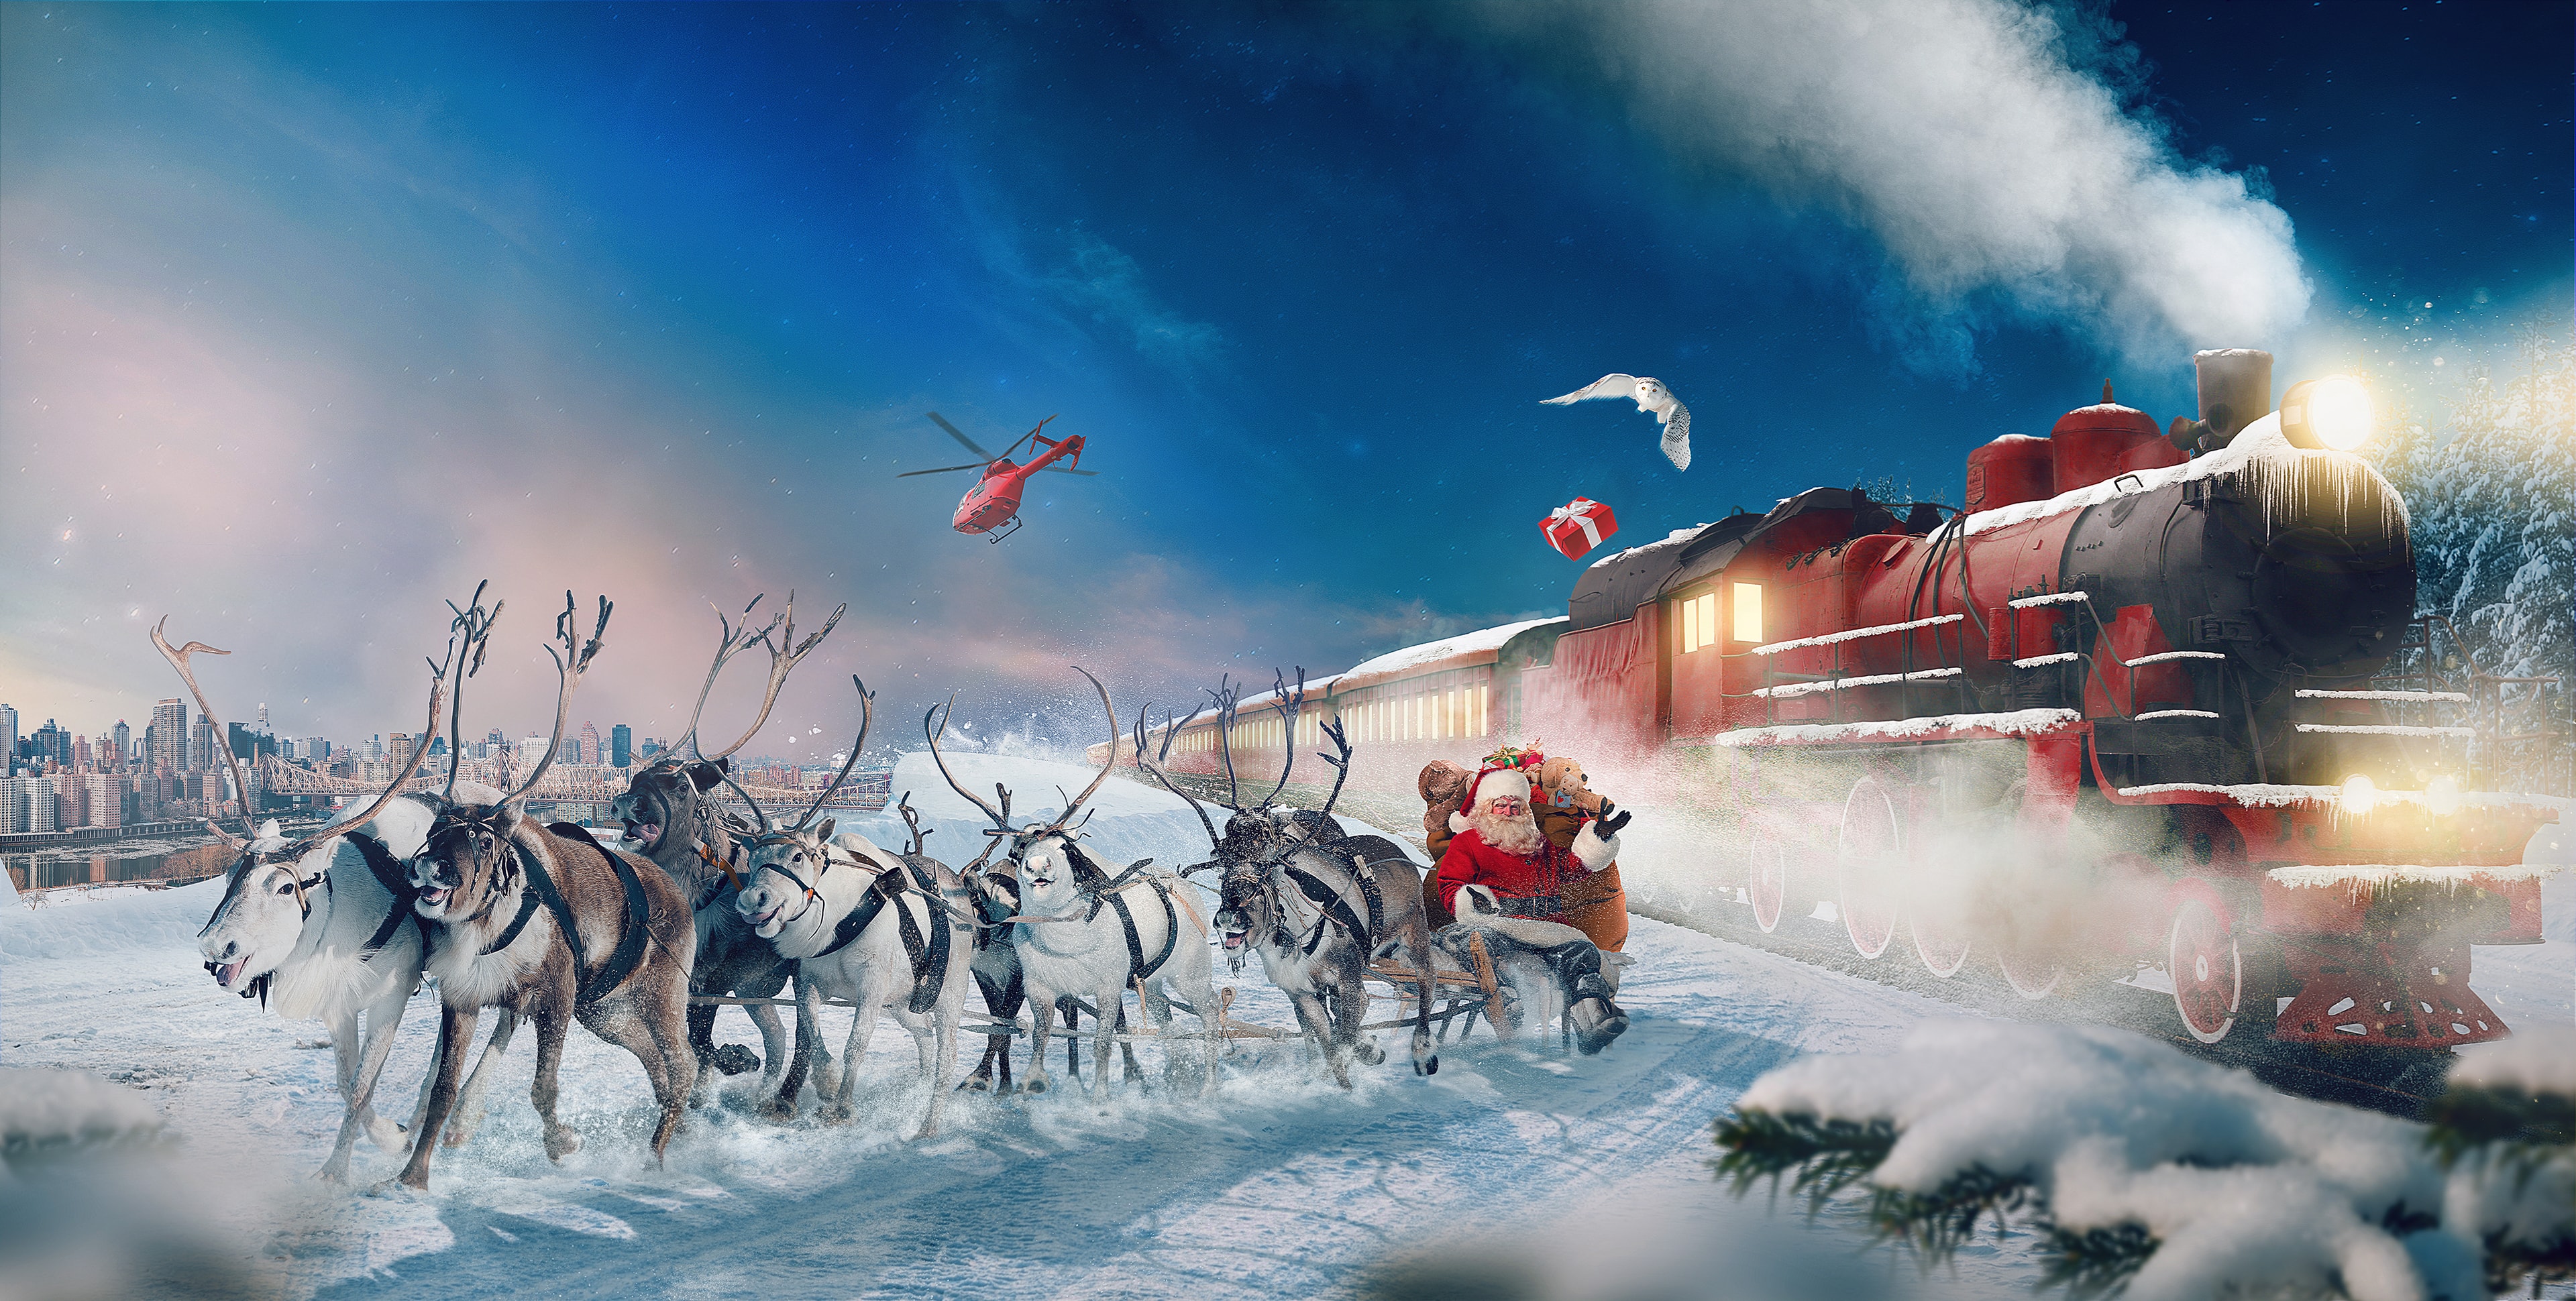 Polar Express Reindeer Chariot Santa Claus Gifts Winter